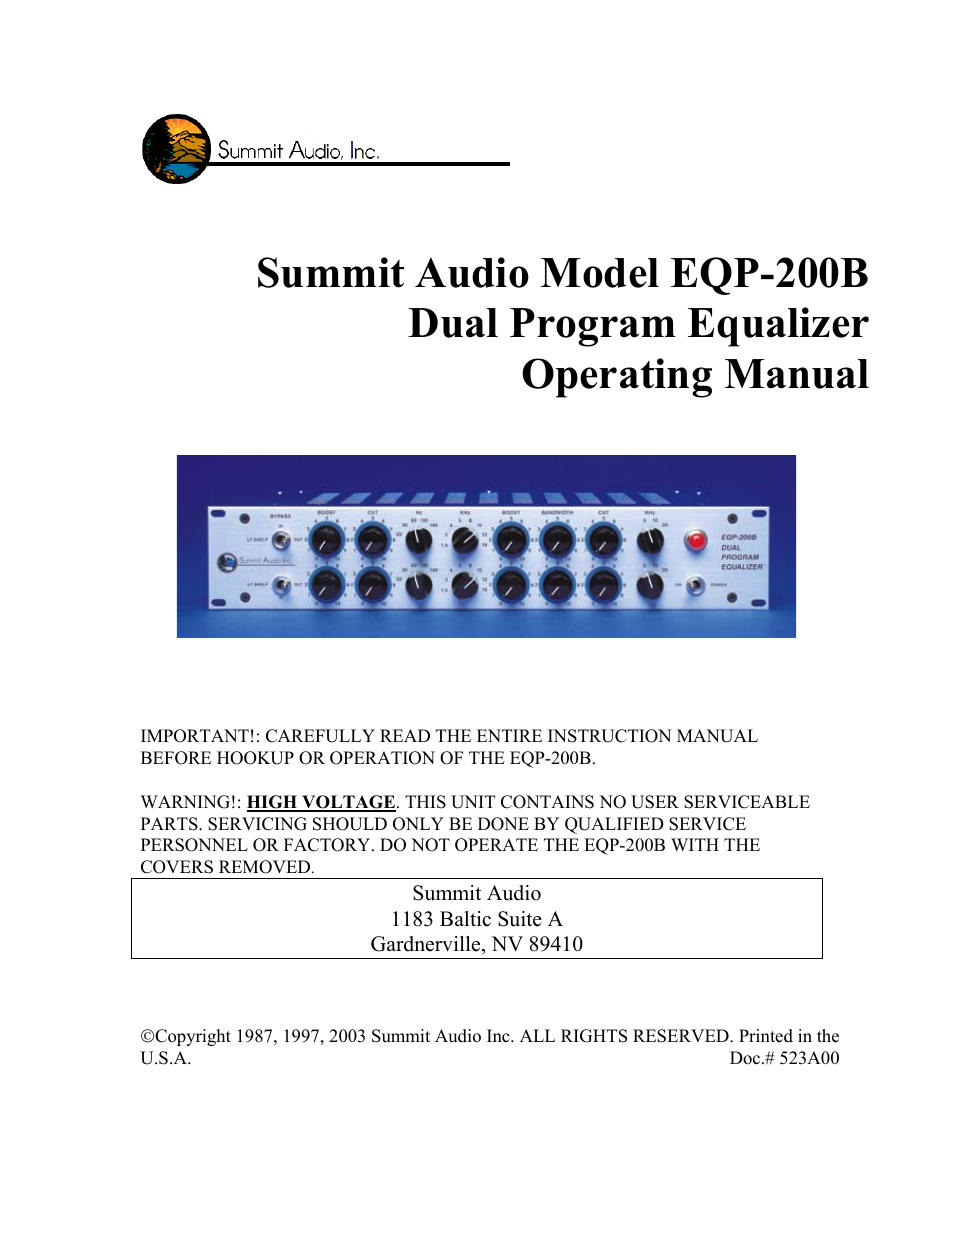 EQP-200B Dual Program Equalizer